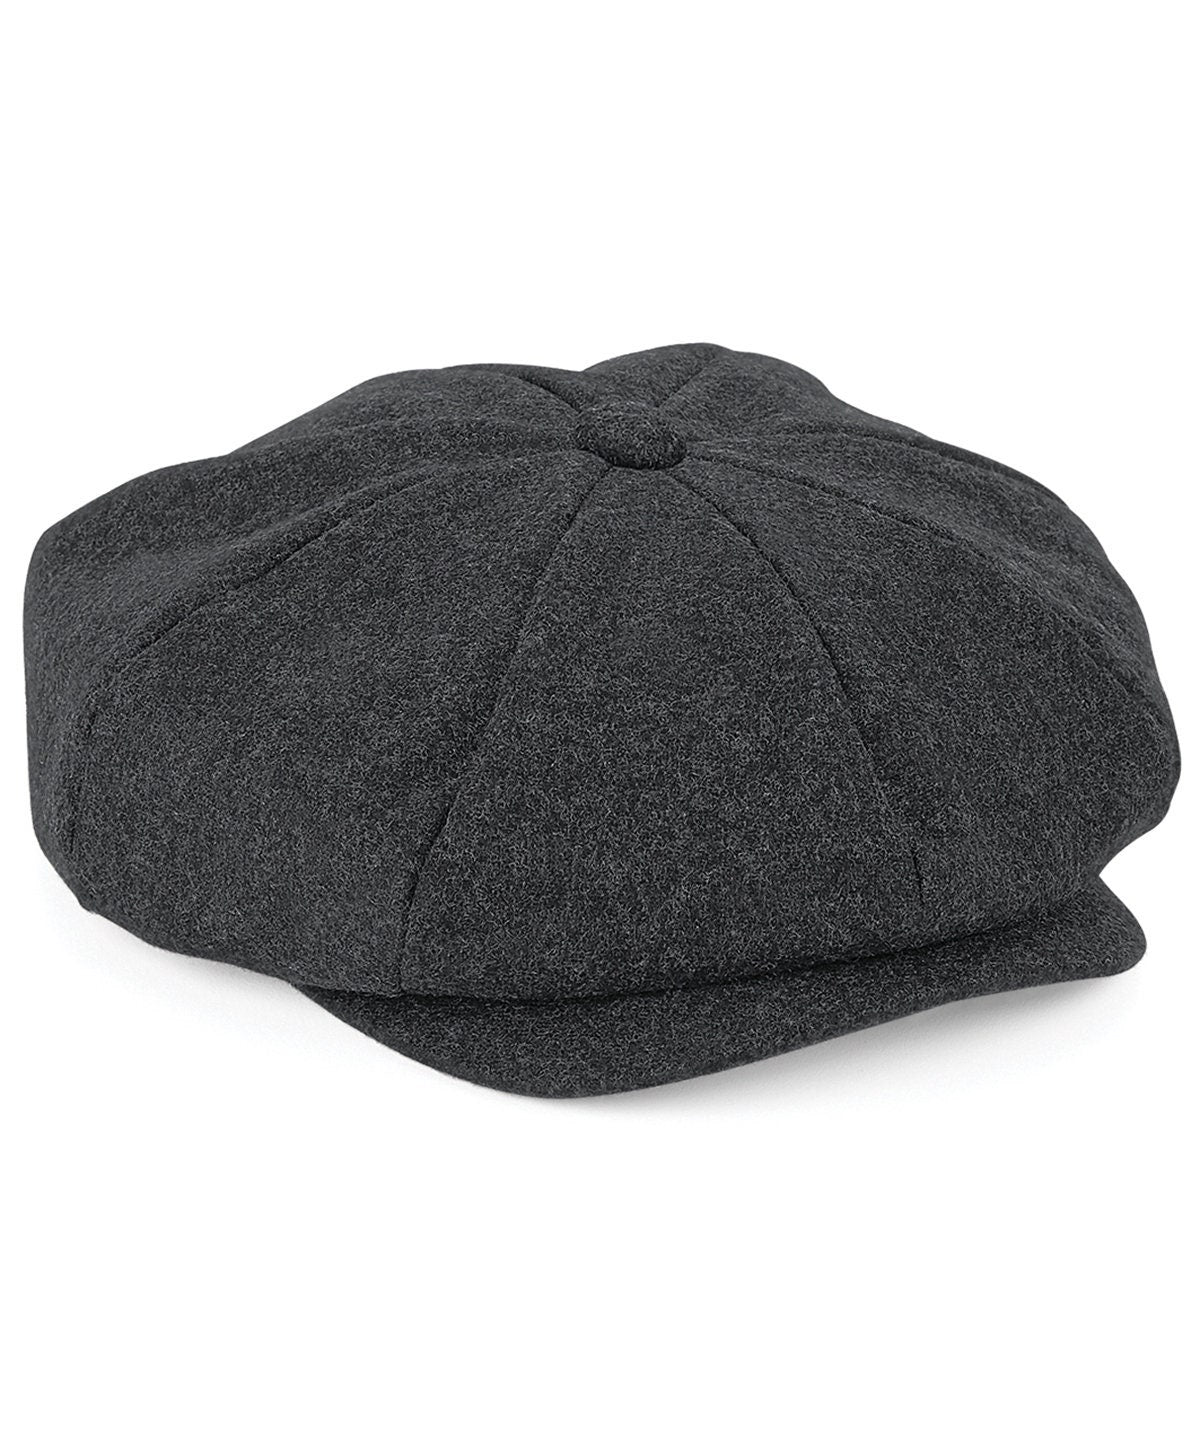 Melton Wool Baker Boy Cap - B629 - Full Quilted Lining Flat Hat Baker Boy Charcoal Grey